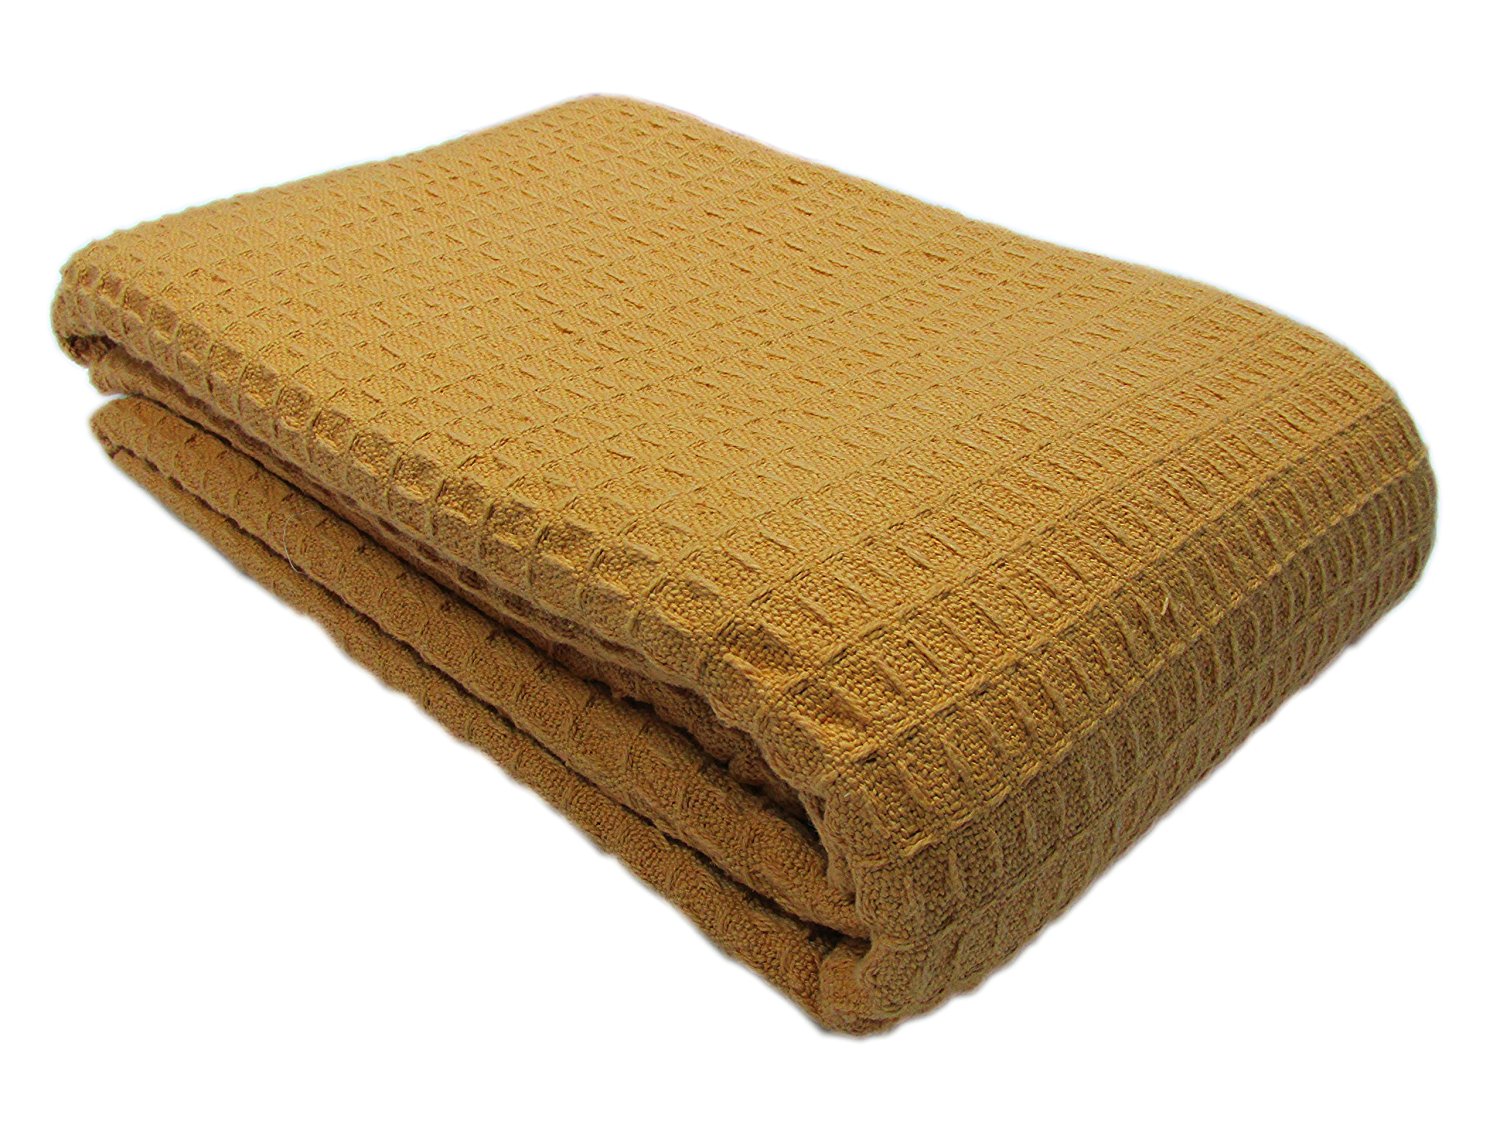 Amazon.com: Organic Cotton Waffle Weave Natural Blanket ...